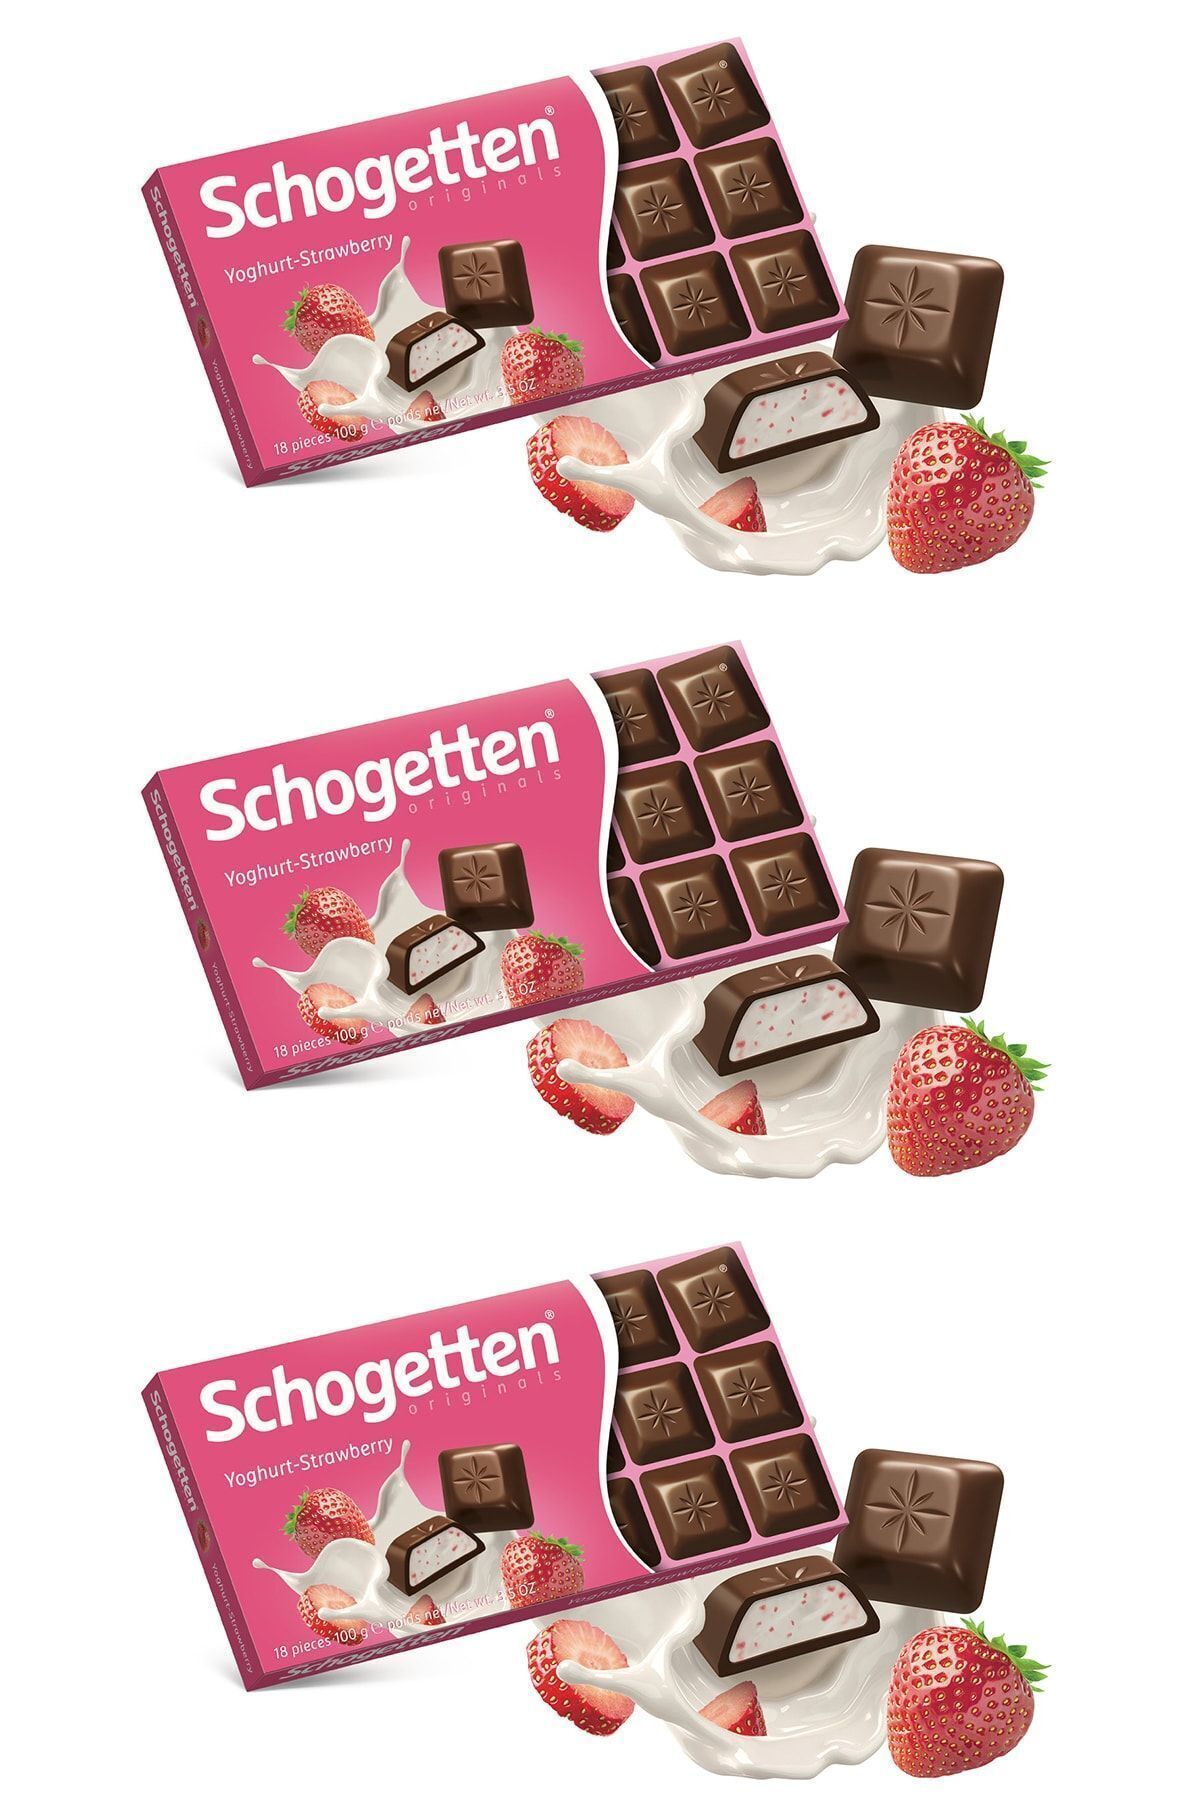 Schogetten Trilogia Çilekli-yoğurtlu Çikolata 100g - 3 Adet